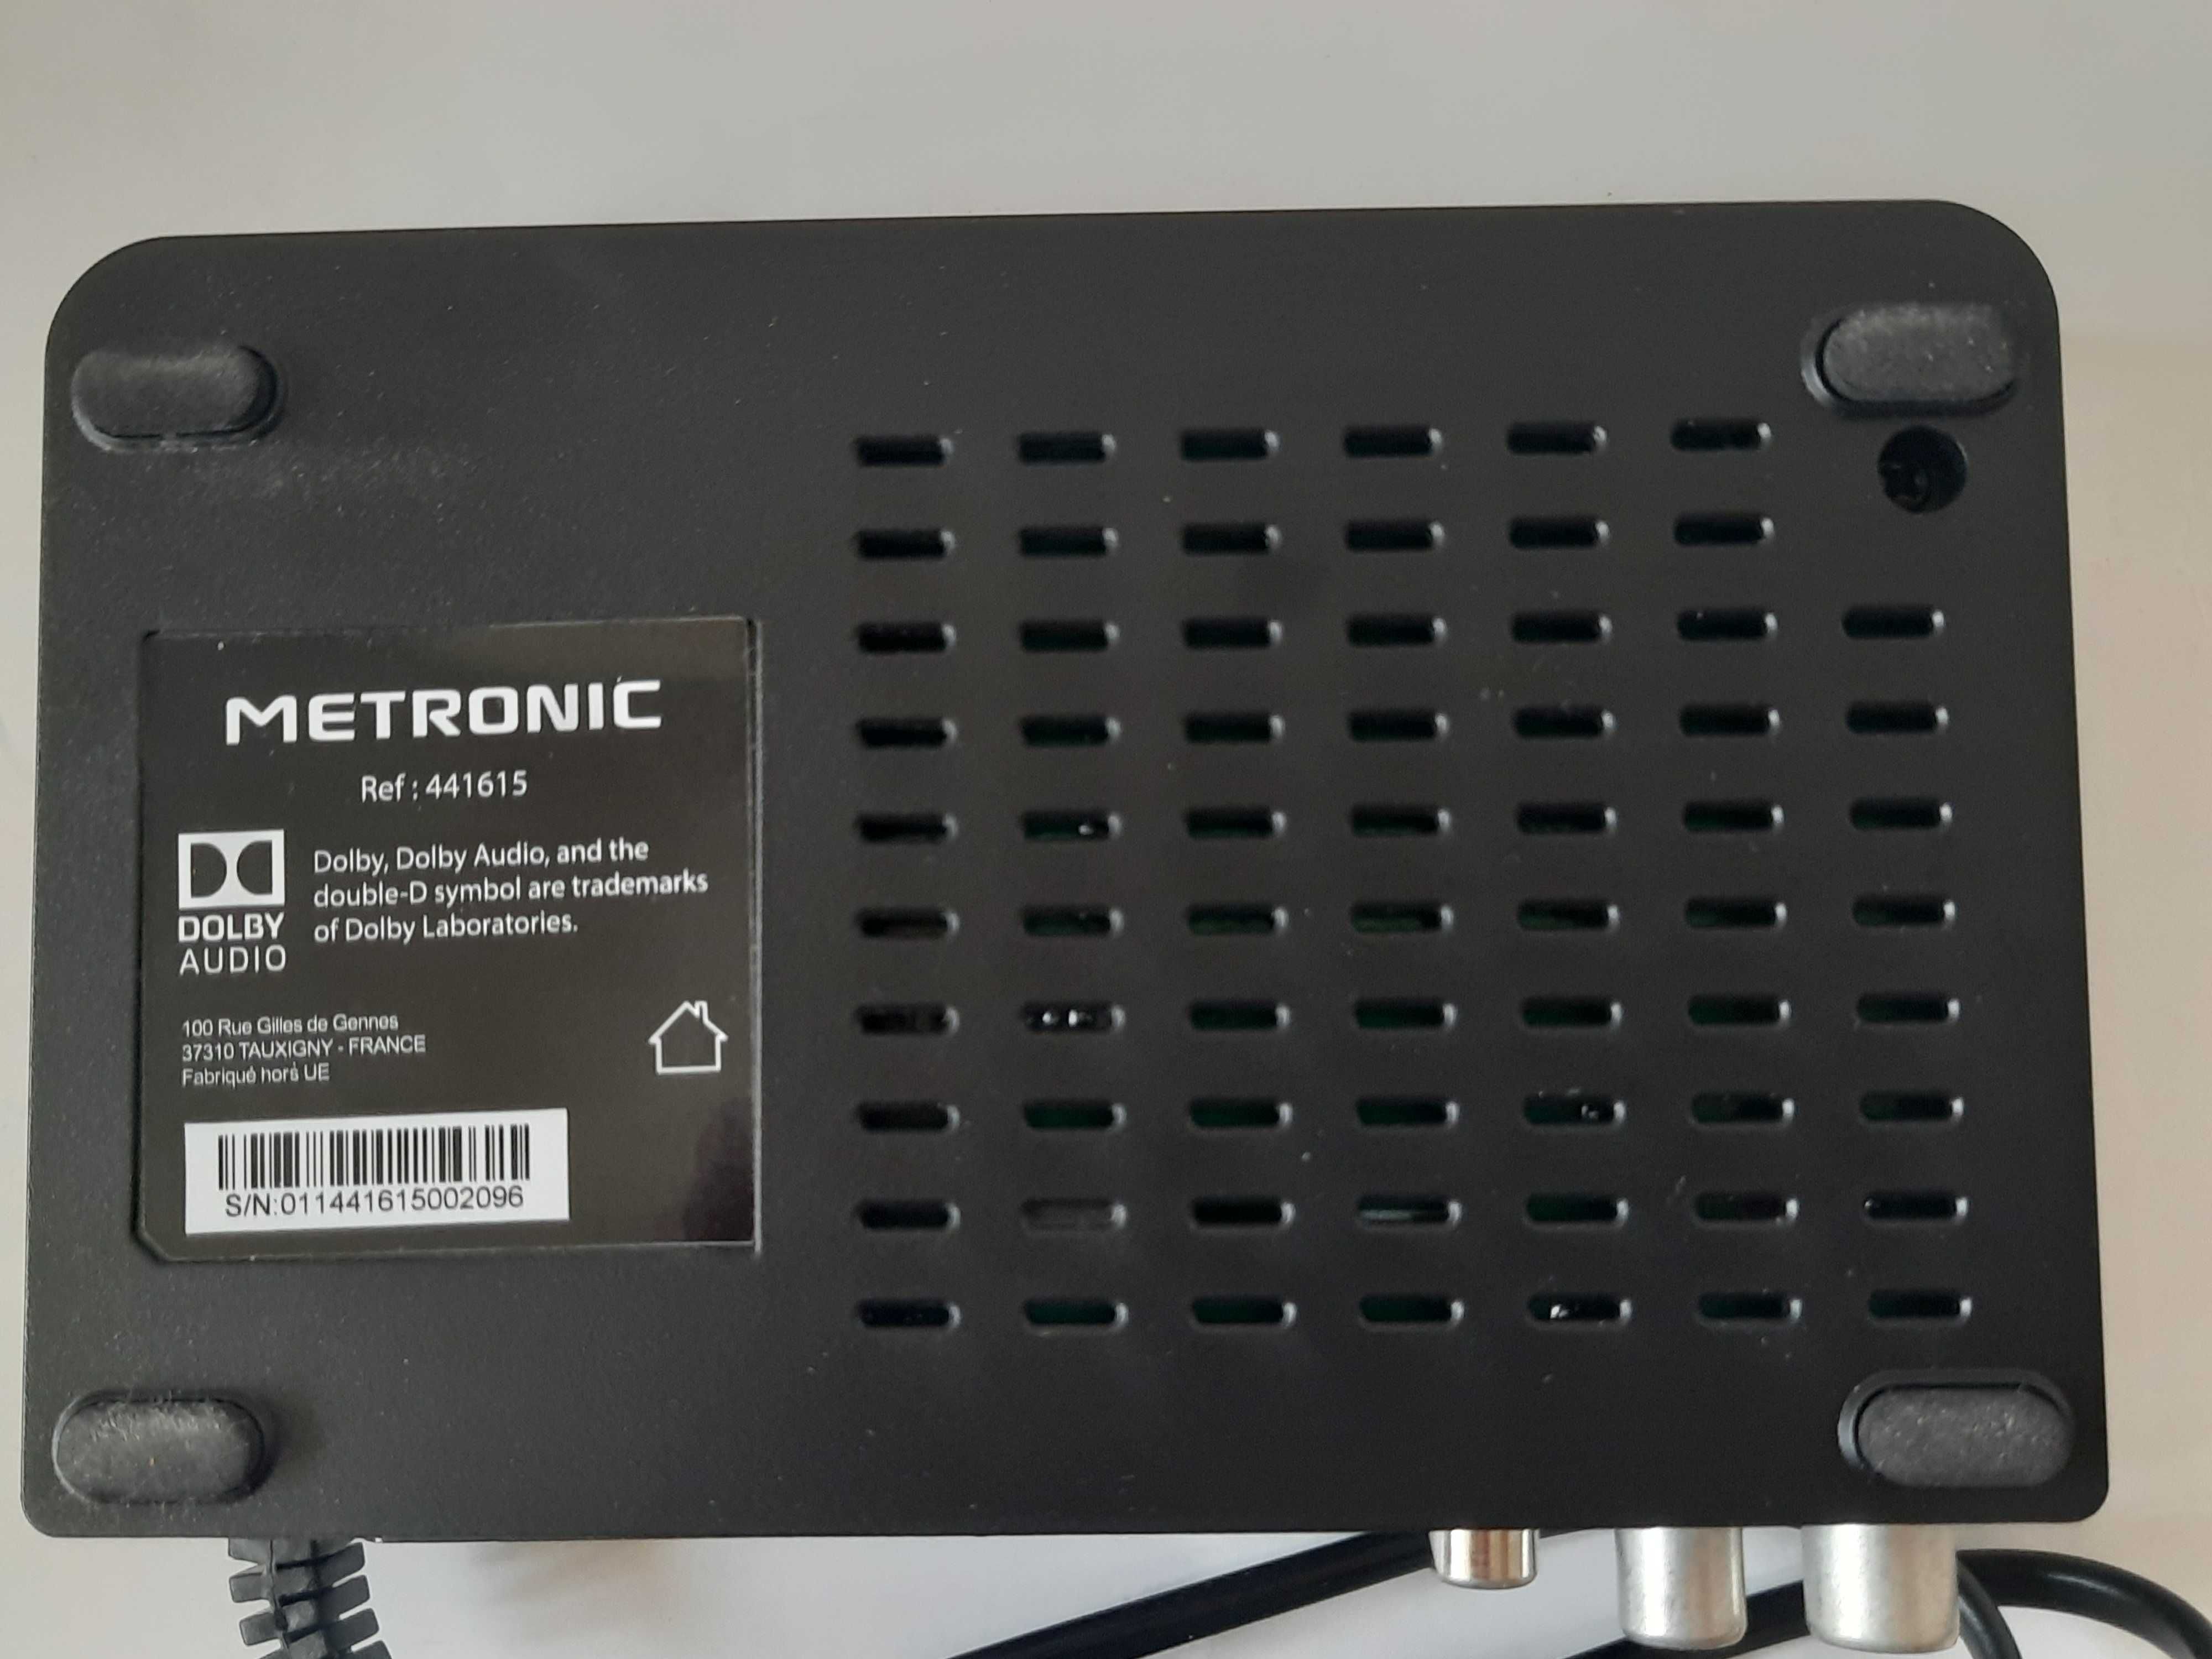 Tuner Dekoder DVB-T Metronic Zapbox HD-SO.1.1